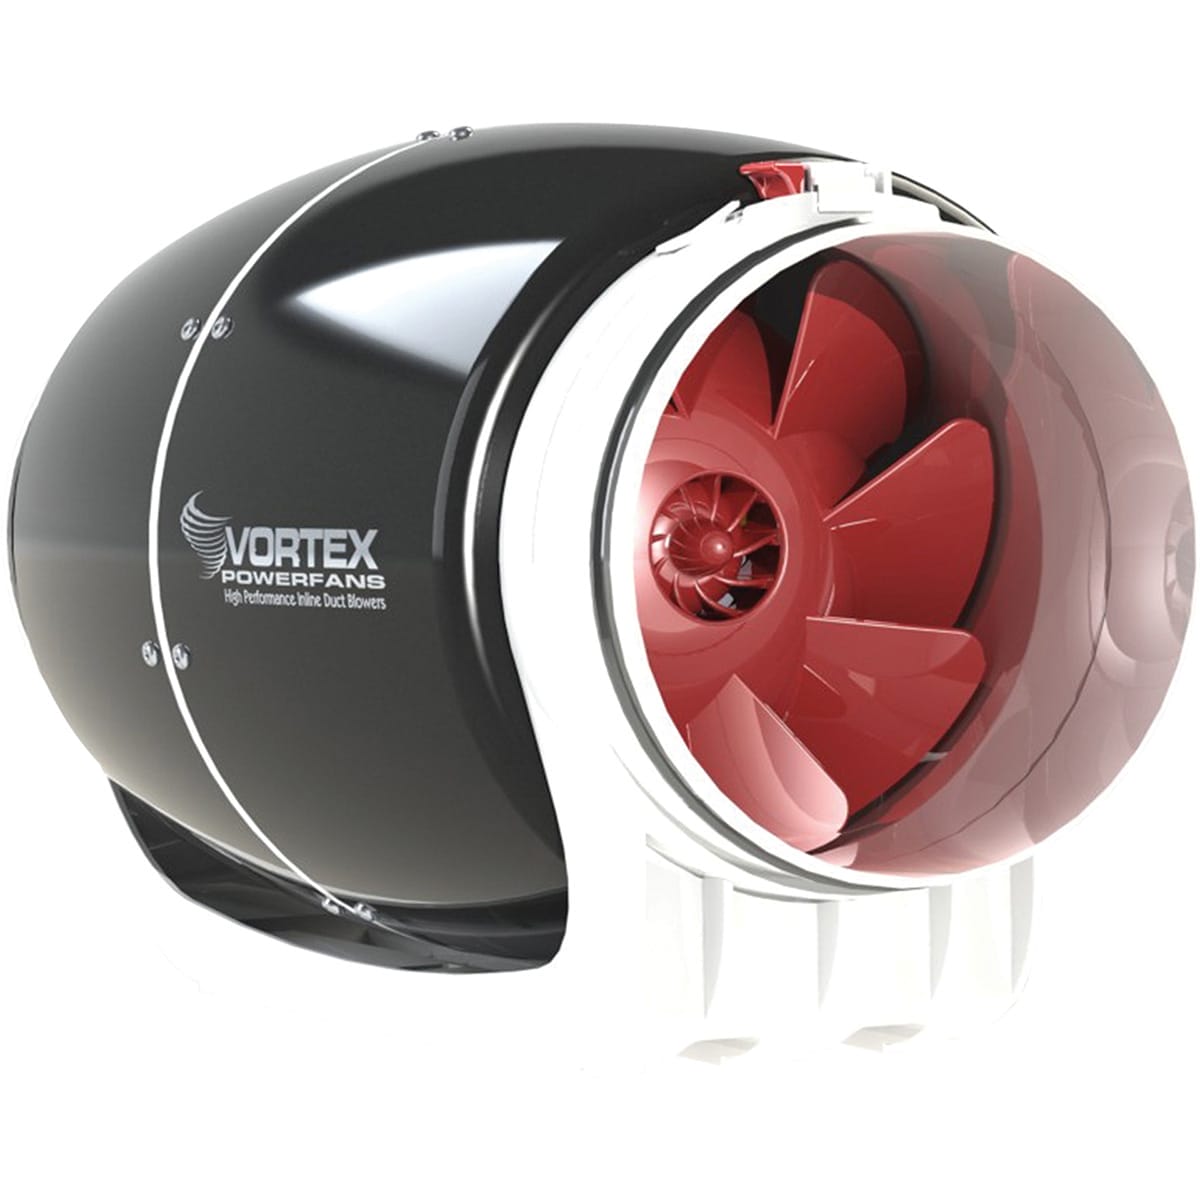 Vortex S-Line 6in 347 CFM Inline Duct Fan